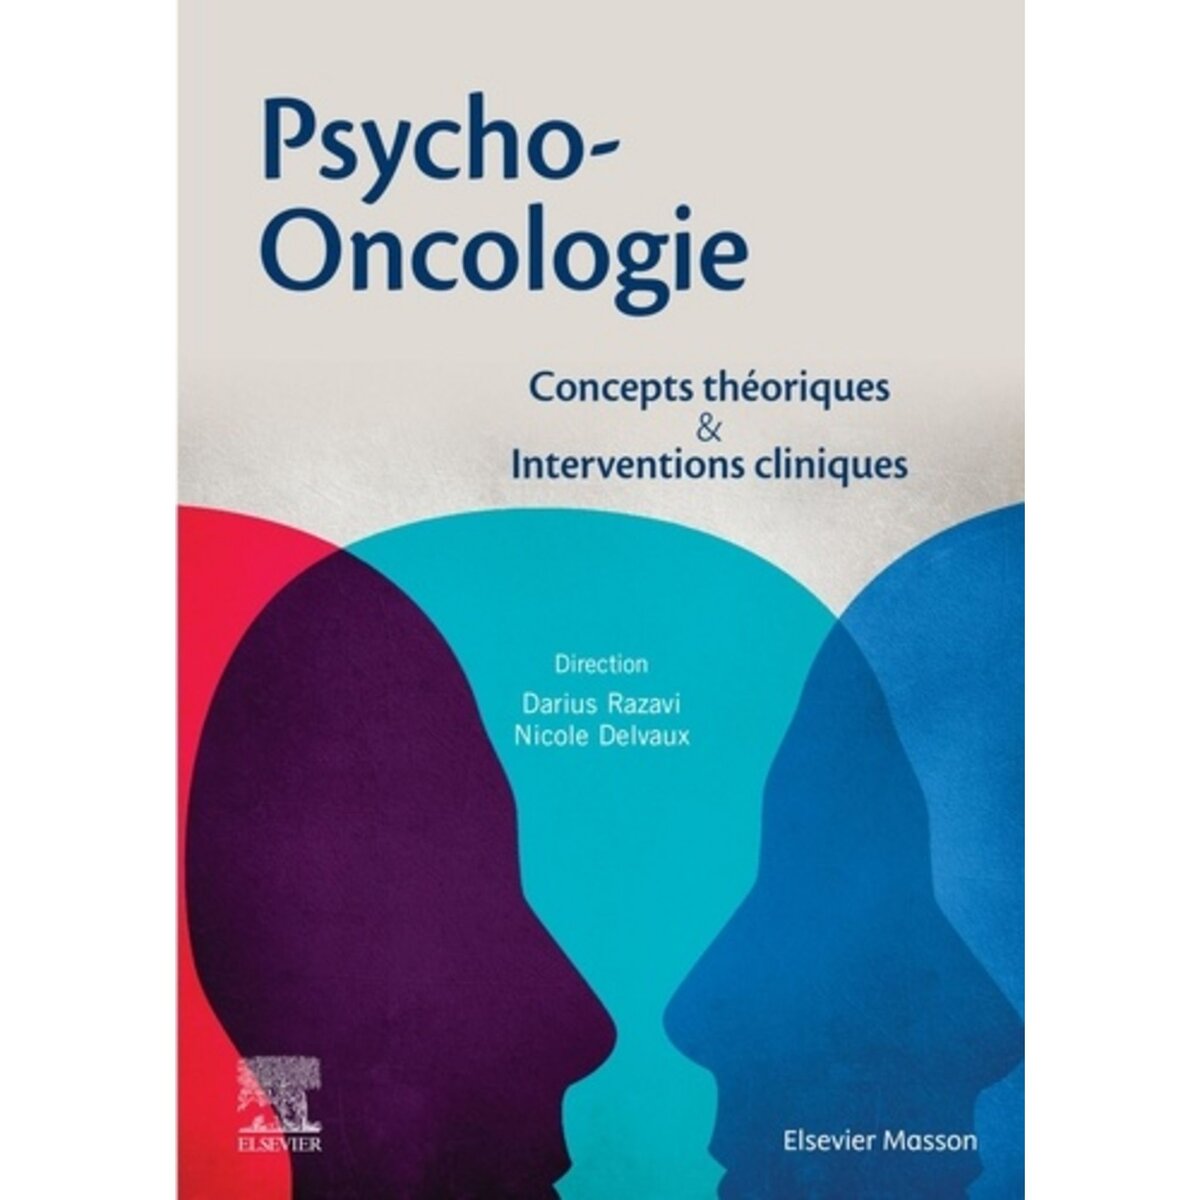  PSYCHO-ONCOLOGIE. CONCEPTS THEORIQUES & INTERVENTIONS CLINIQUES, 2E EDITION, Razavi Darius